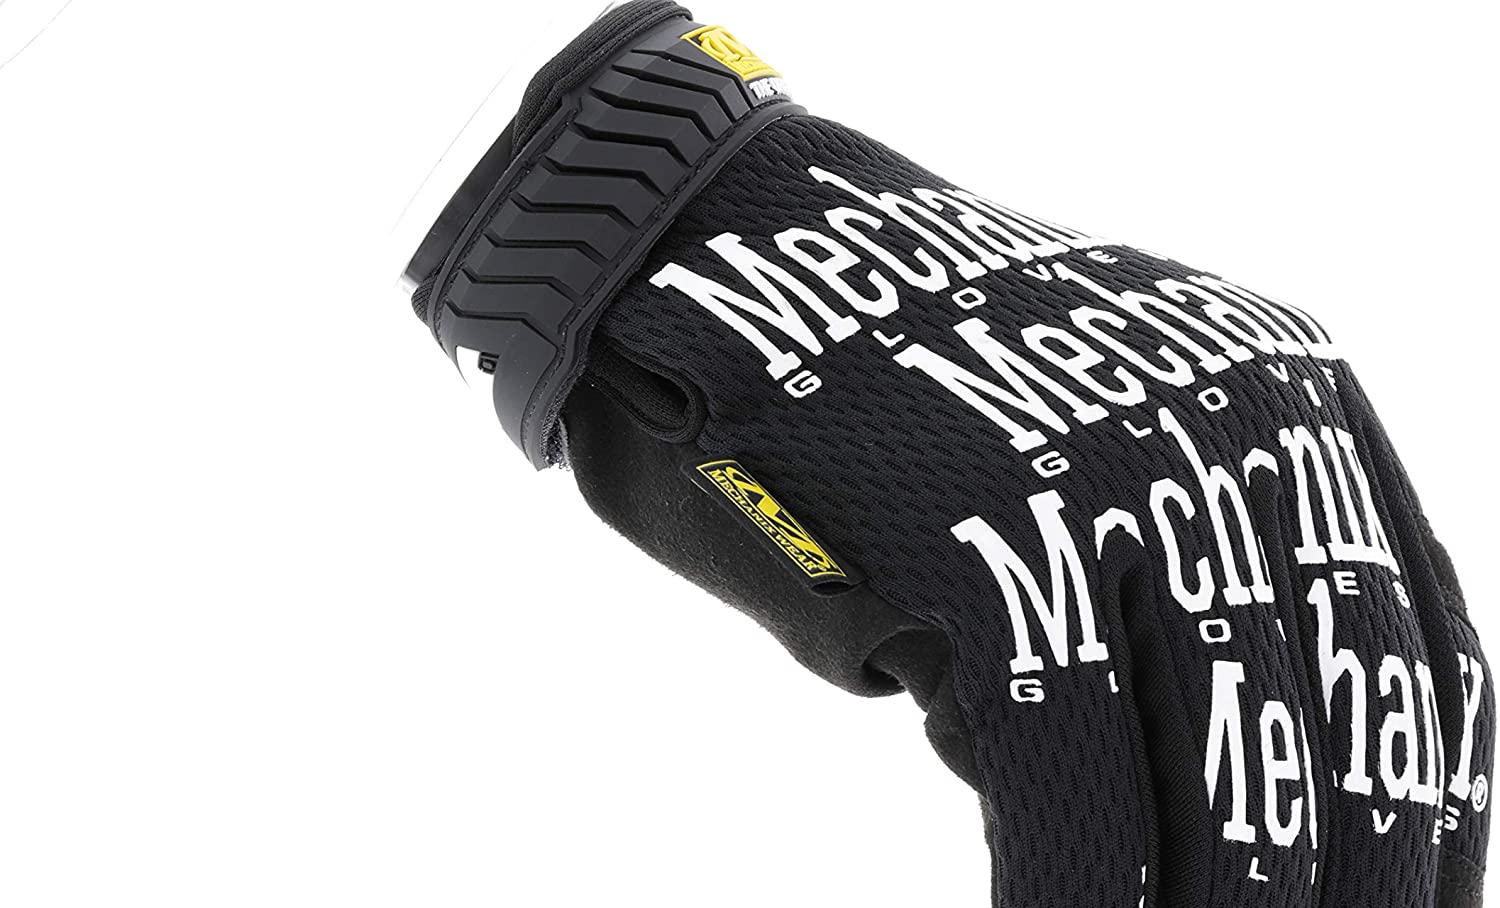 Mechanix Wear Original Glove, Black, Size Medium - image 4 of 8